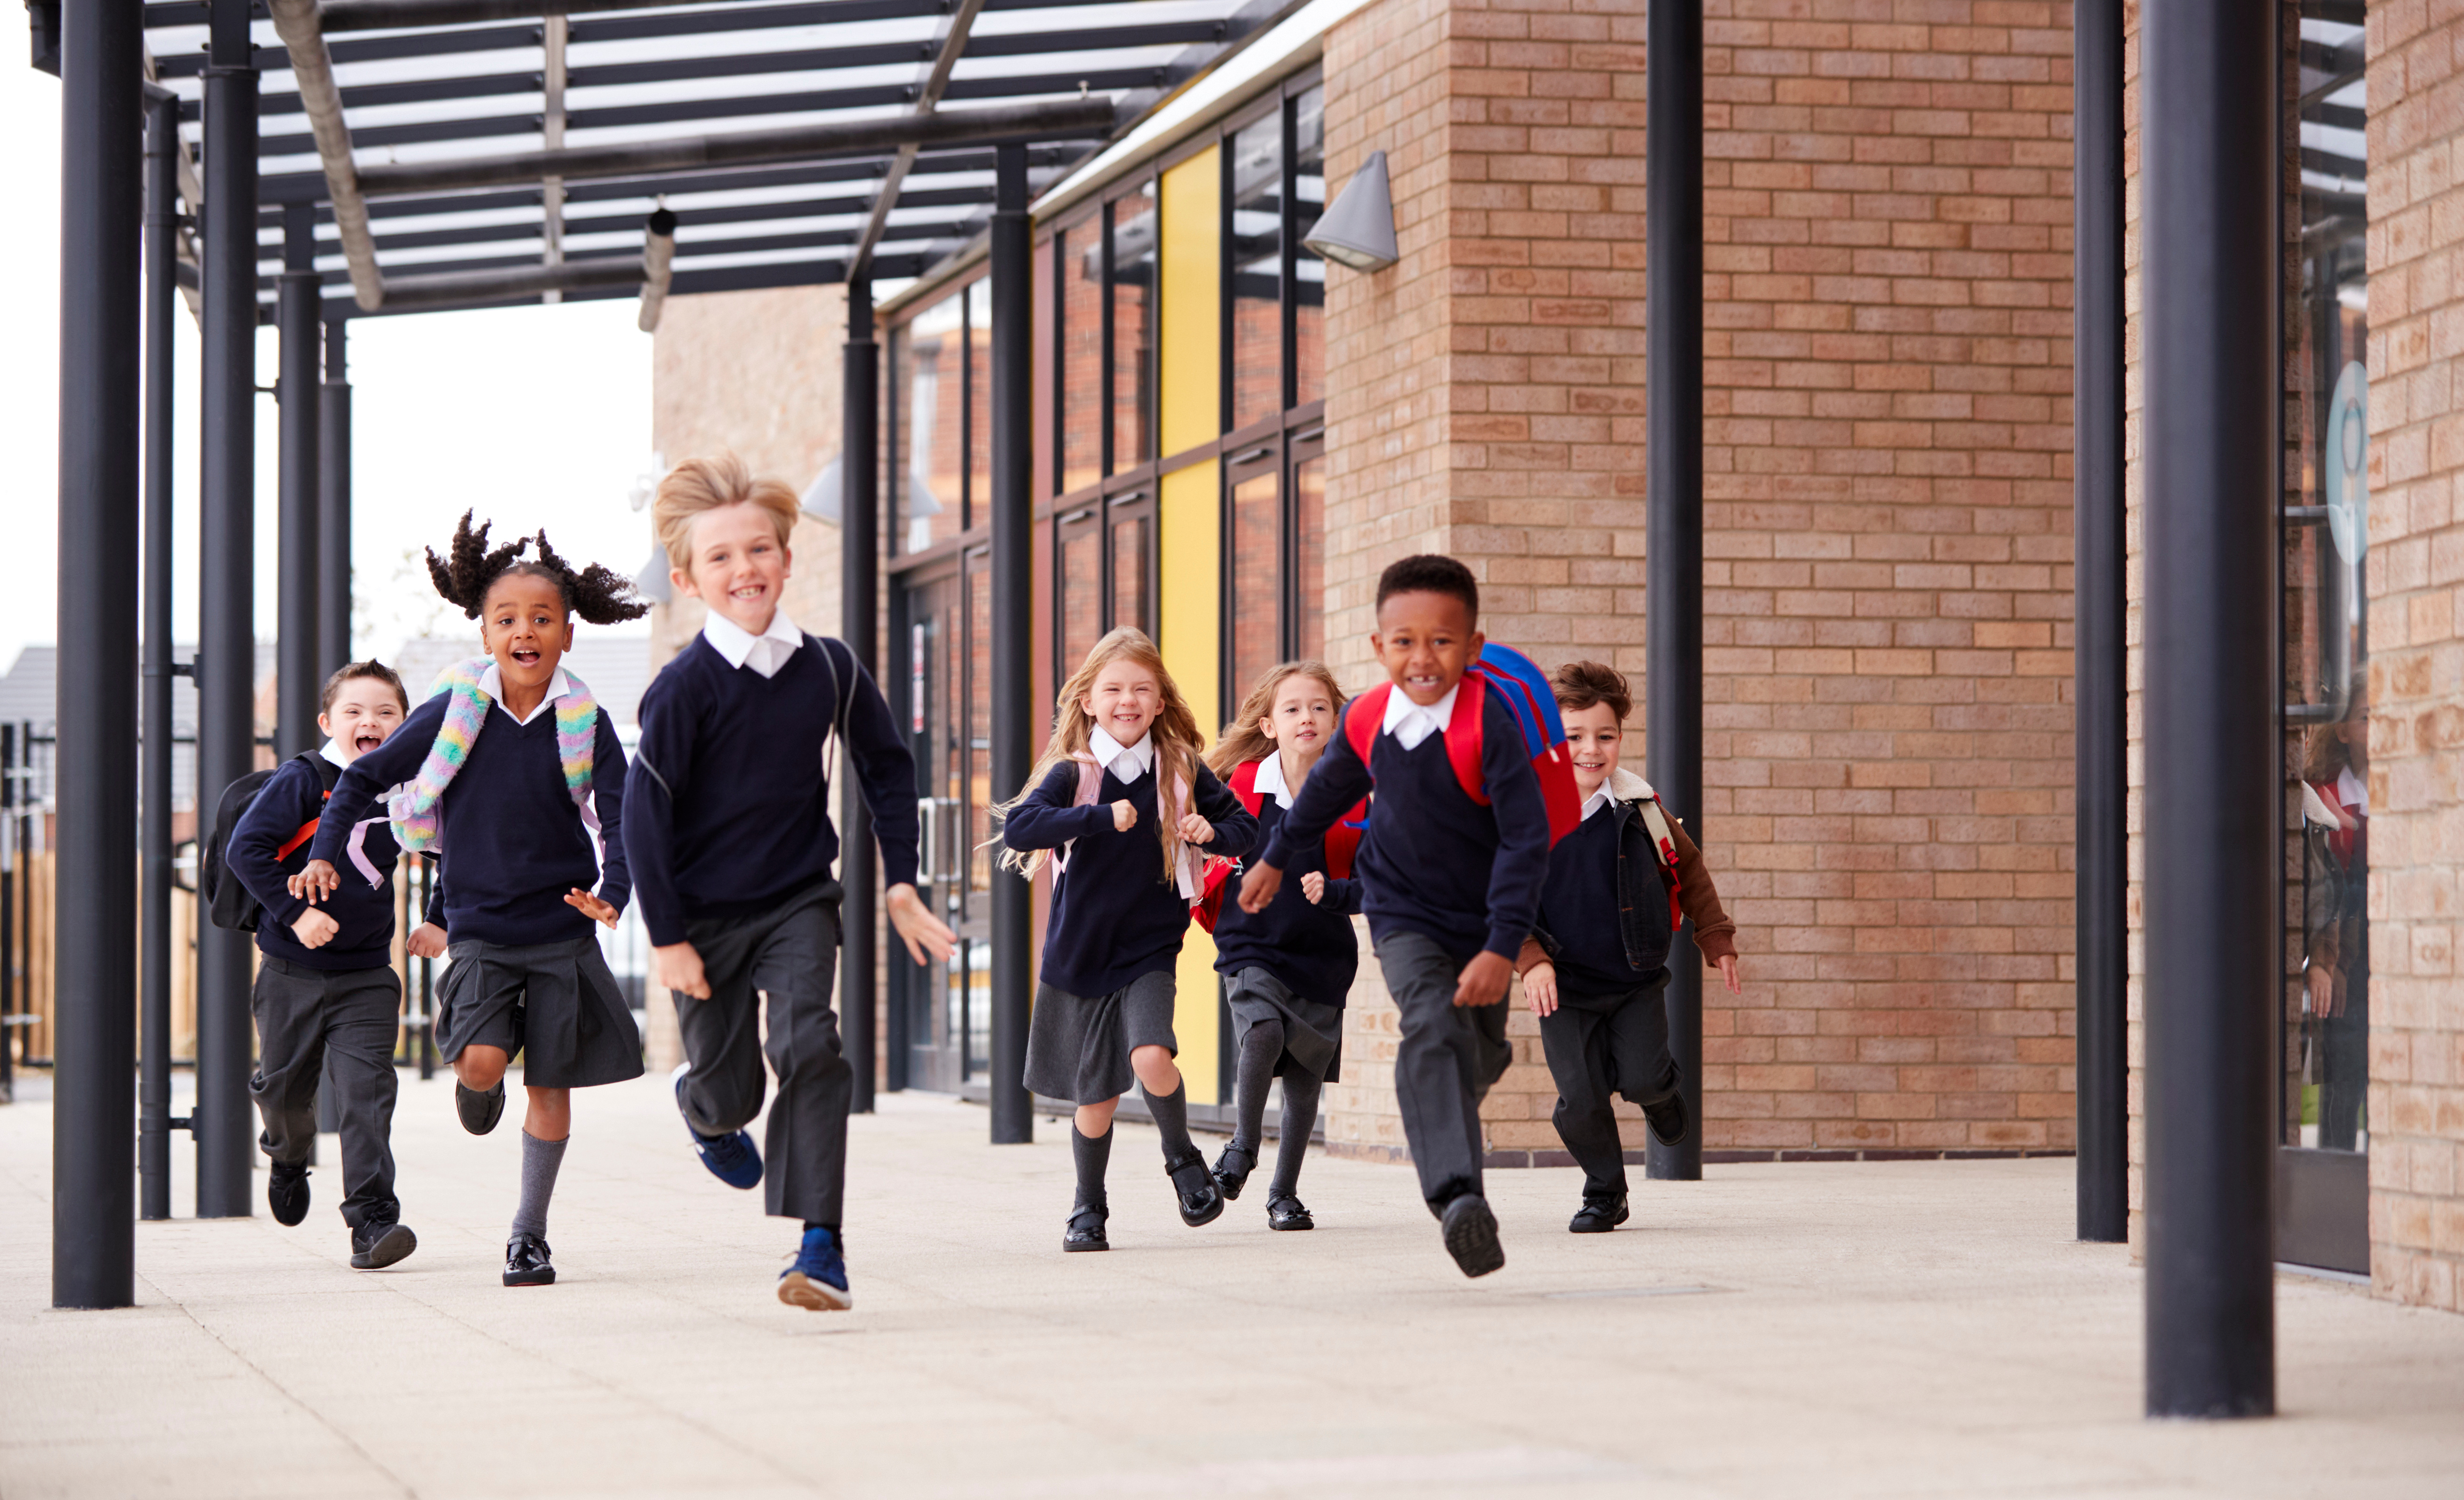 Seven primary school children run smiling towards the camera.